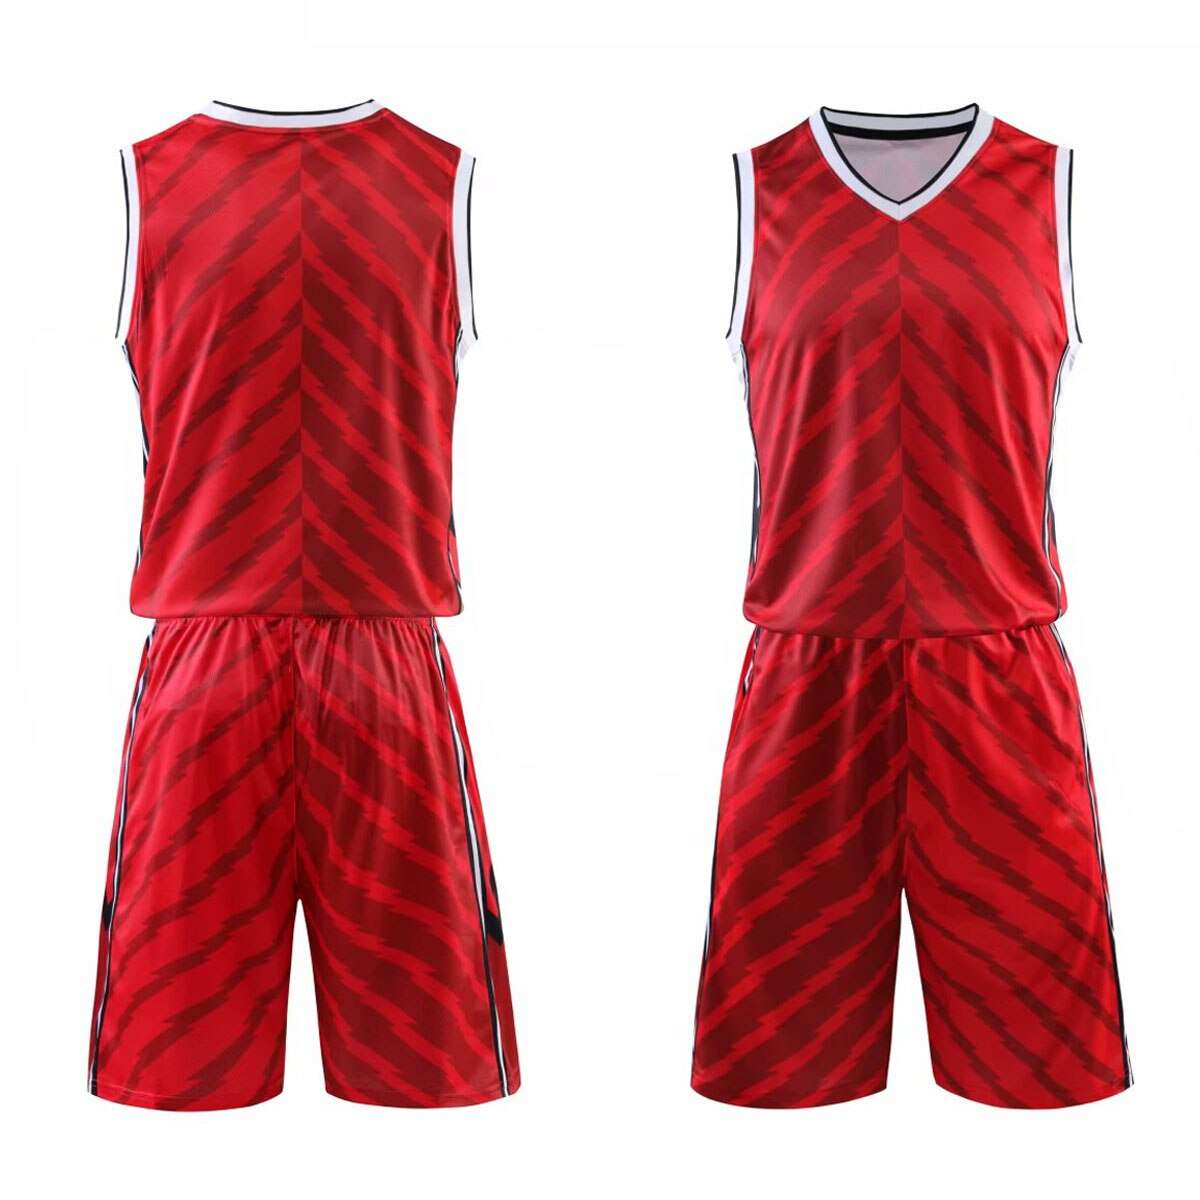 Men Basketball Jerseys Suit Youth Basketball Uniforms Custom Kits Sports Clothing Track Suit Throwback Jerseys Shorts 1